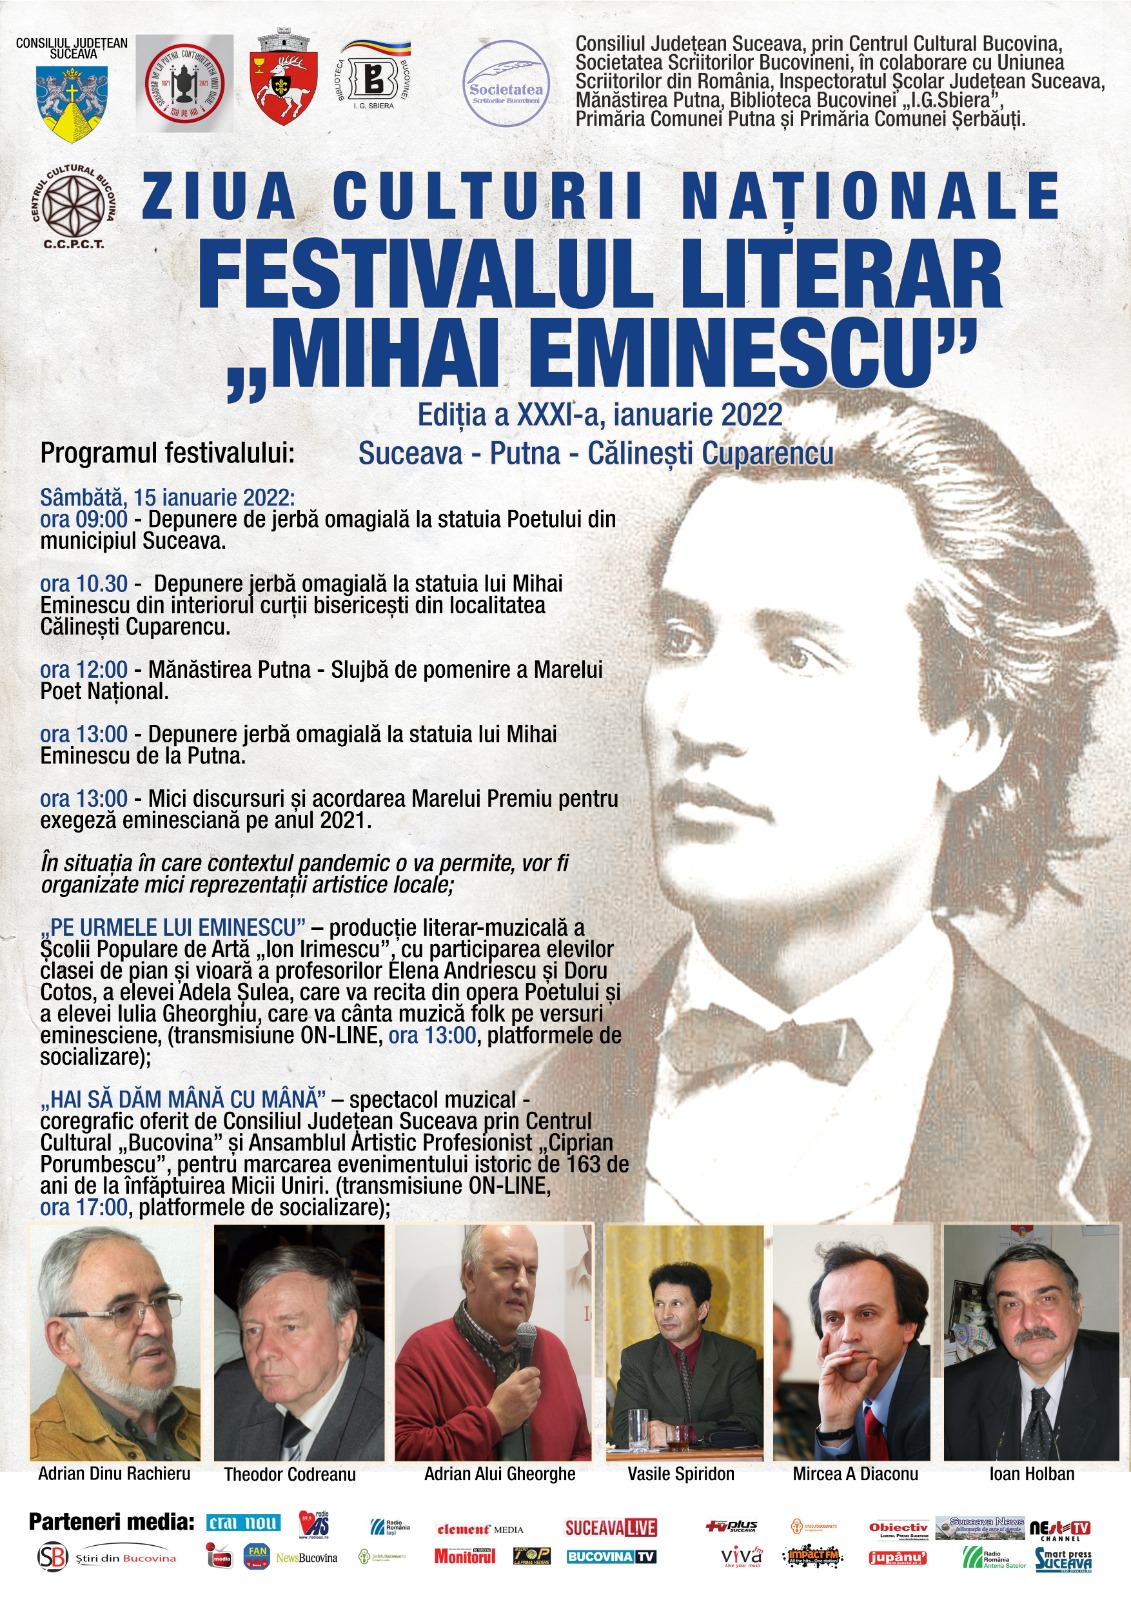 Since drive Competitive Festivalul literar „Mihai Eminescu”- ediția a XXXI-a, ianuarie 2022 |  Suceava News Online